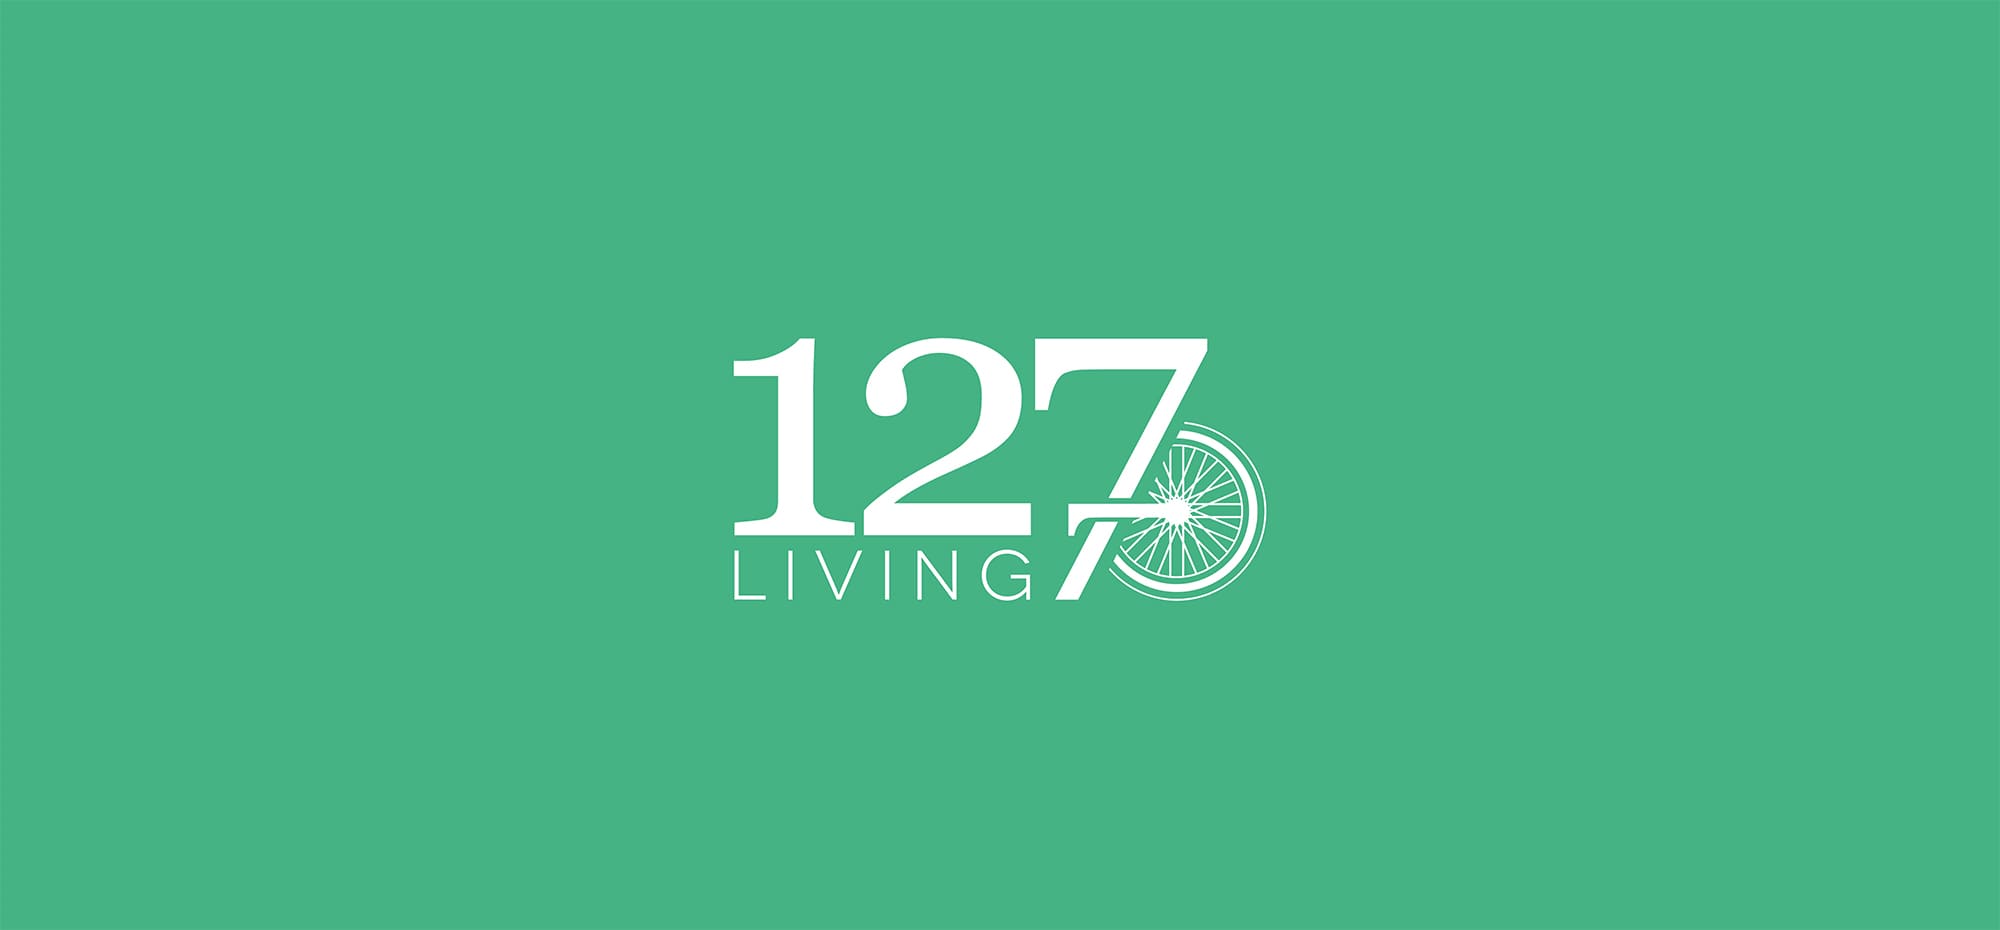 127 LIVING